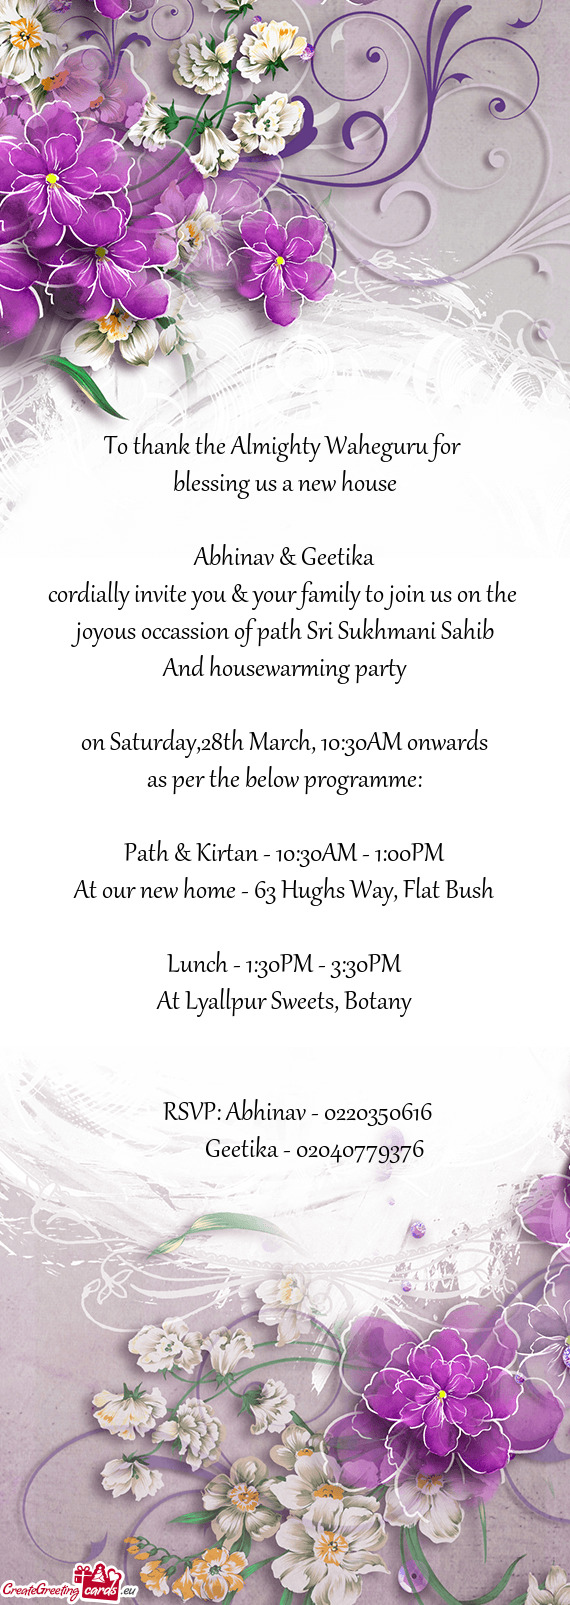 sukhmani sahib path invitation cards templates